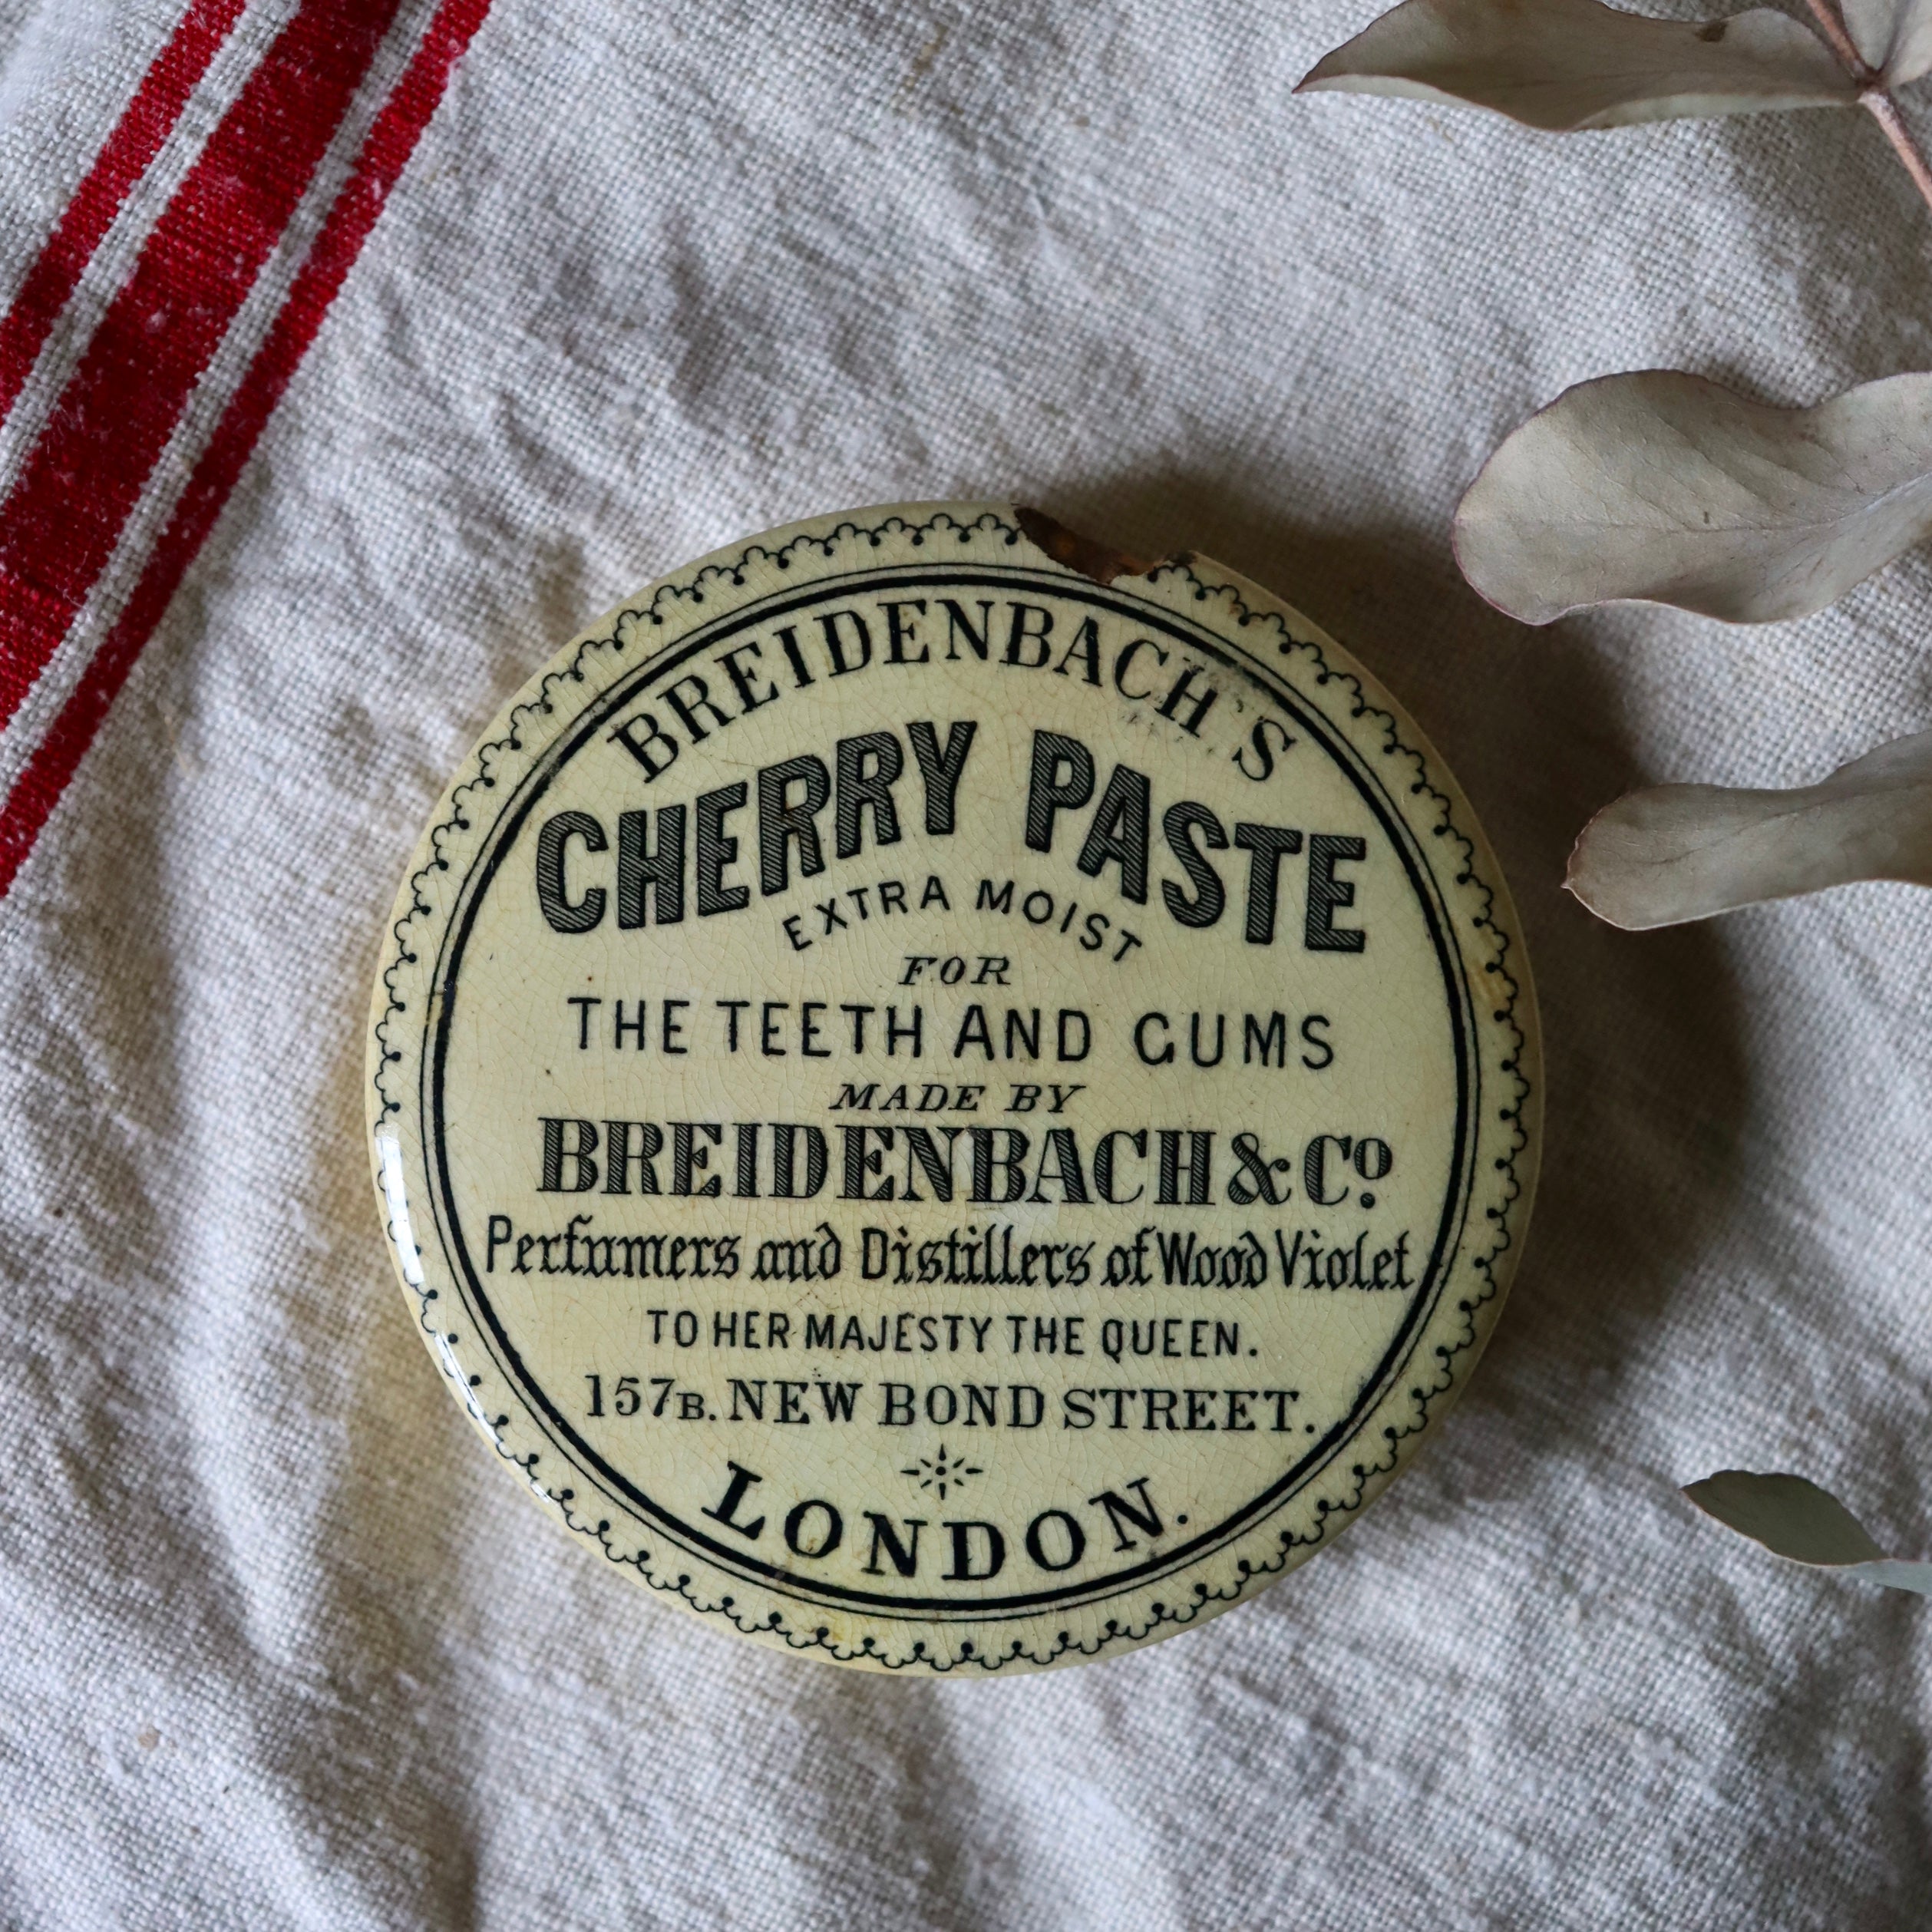 Breidenbach's Cherry Paste London Pot Lid